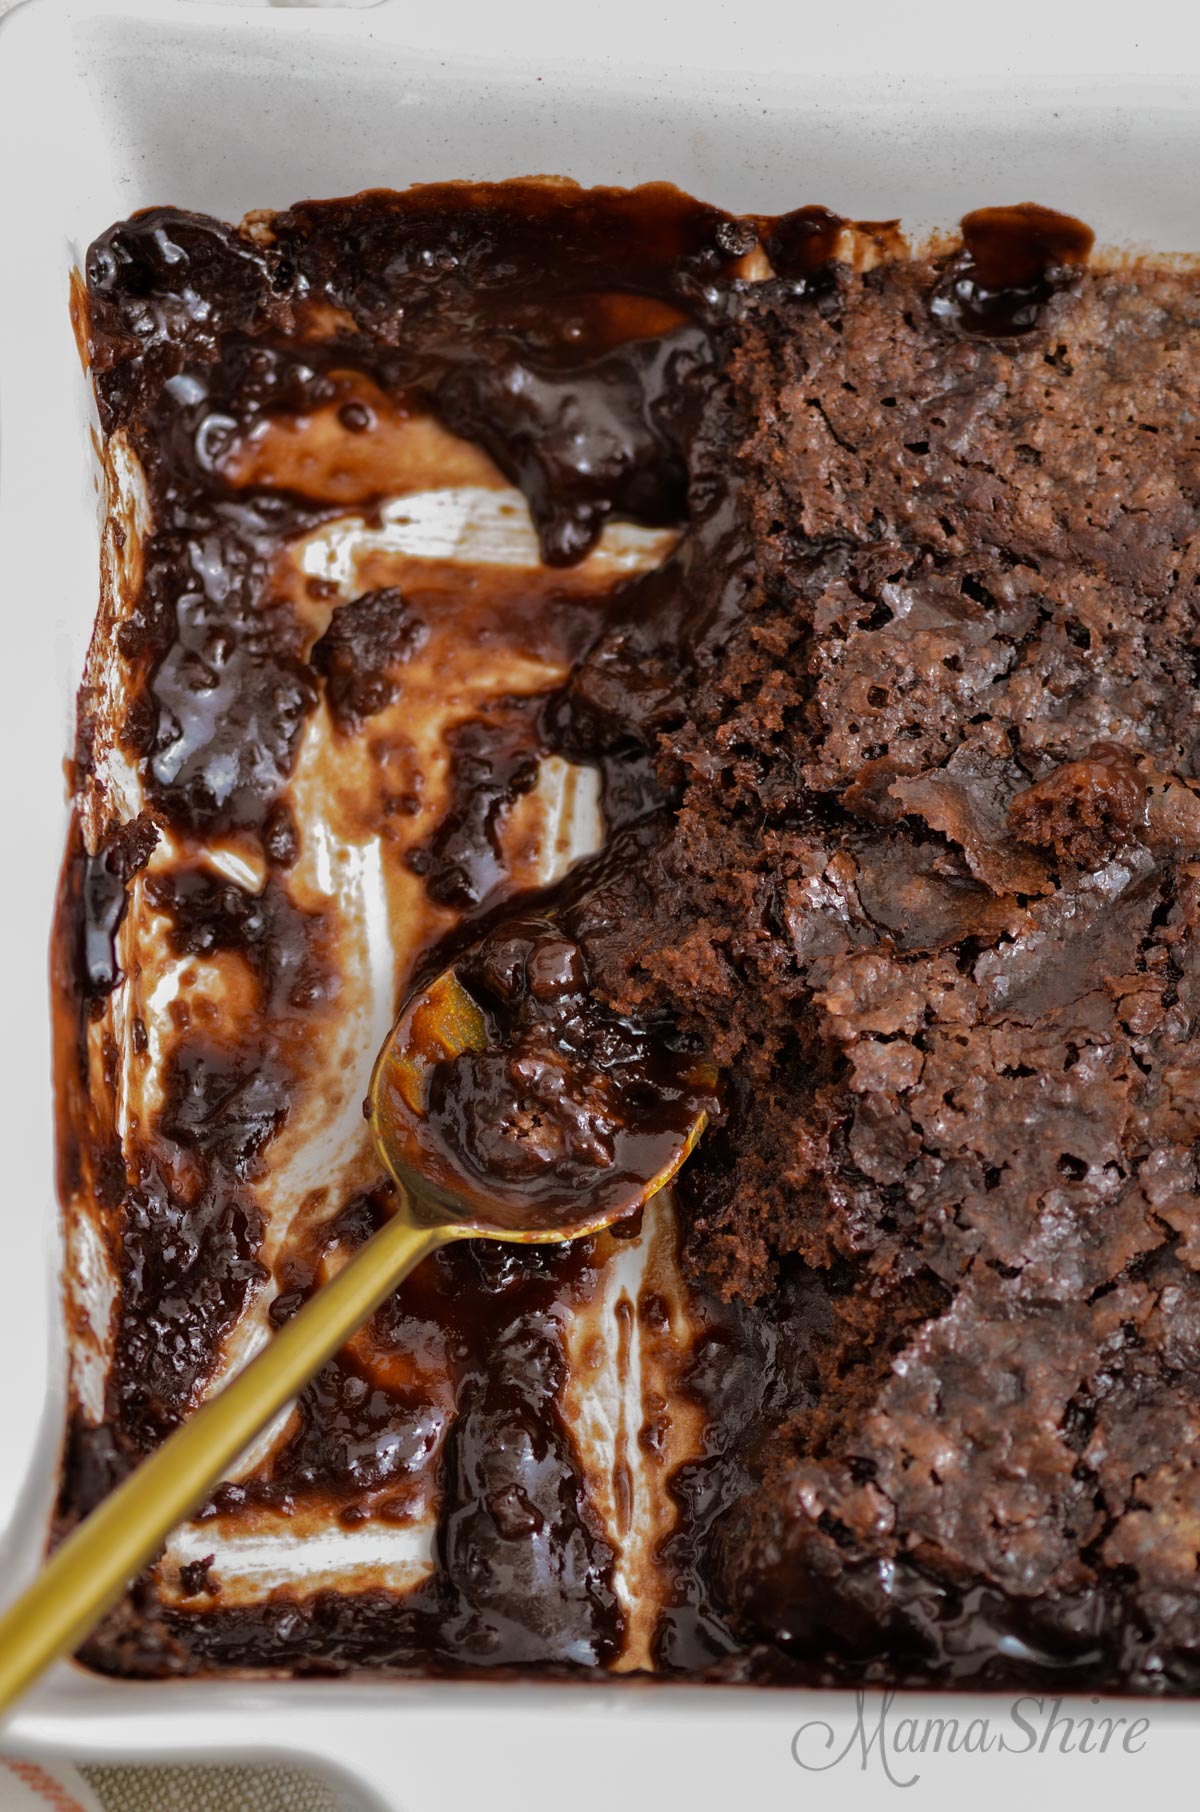 Hot fudge chocolate pudding cake made with a gluten-free recipe.